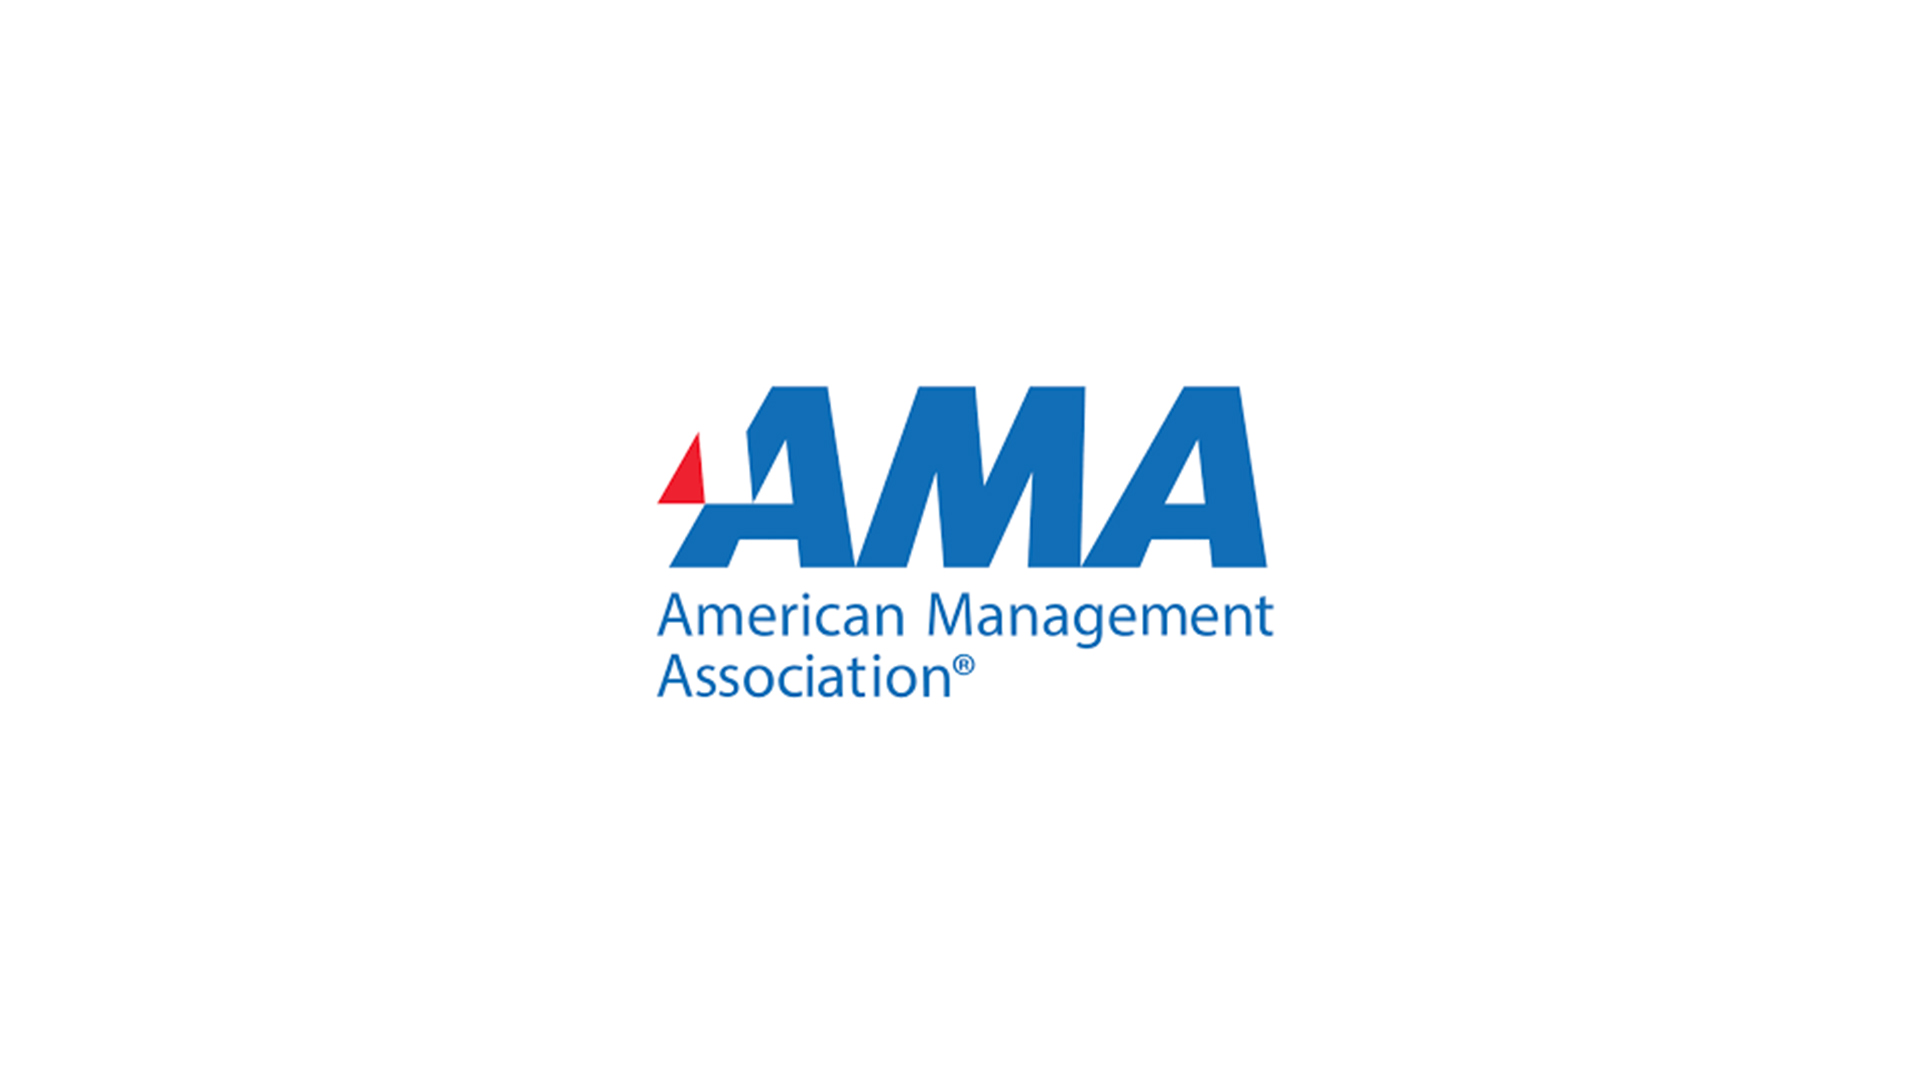 The American Management Association (AMA)